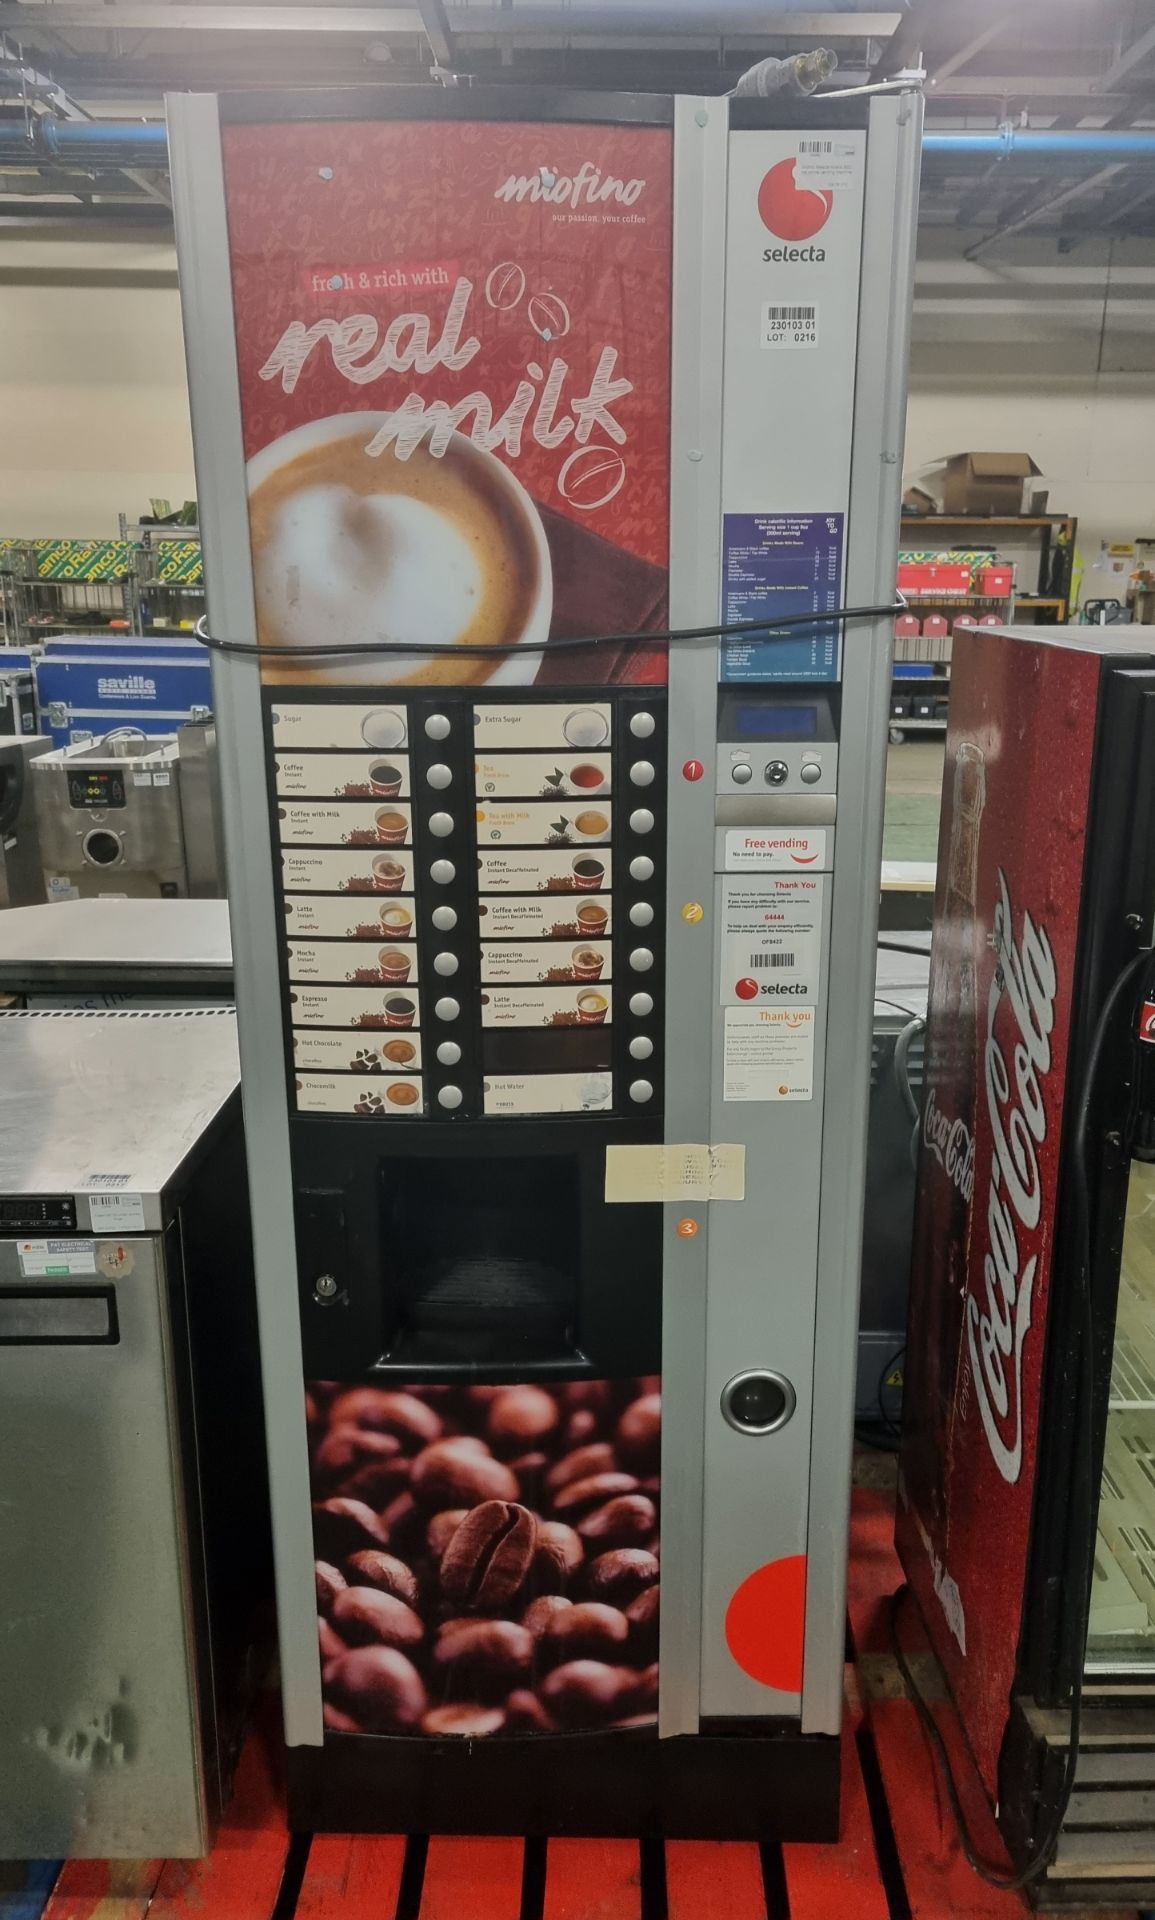 Miofino Selecta Milano B2C hot drinks vending machine - no key